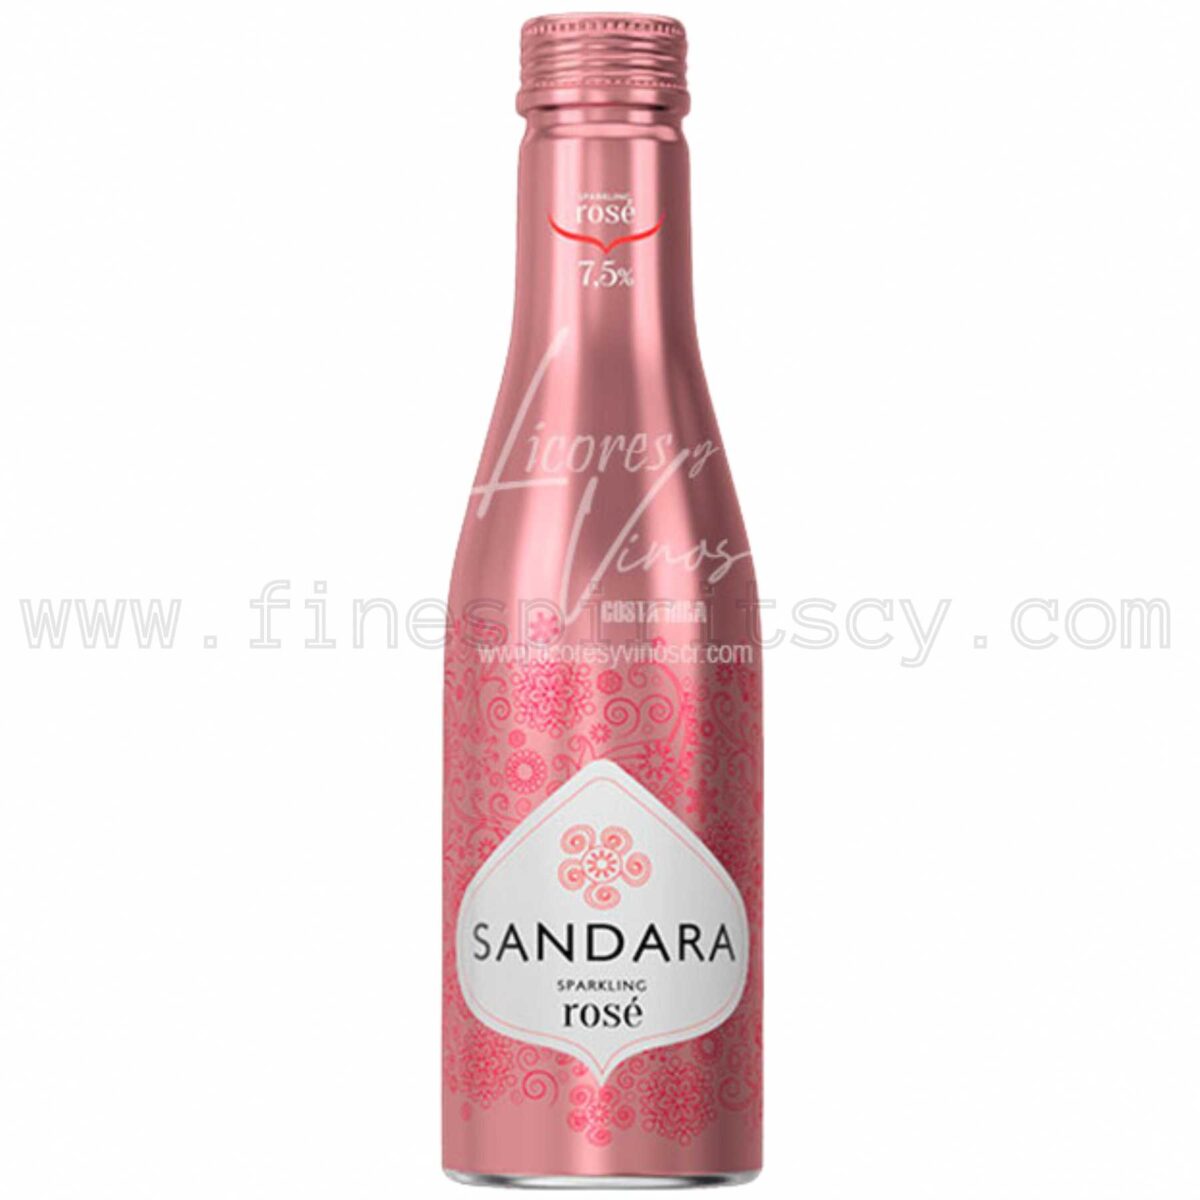 Sandara Rosado Prosecco Espumoso Rose Wine 20cl 200ml 0.2L Price Cyprus CY